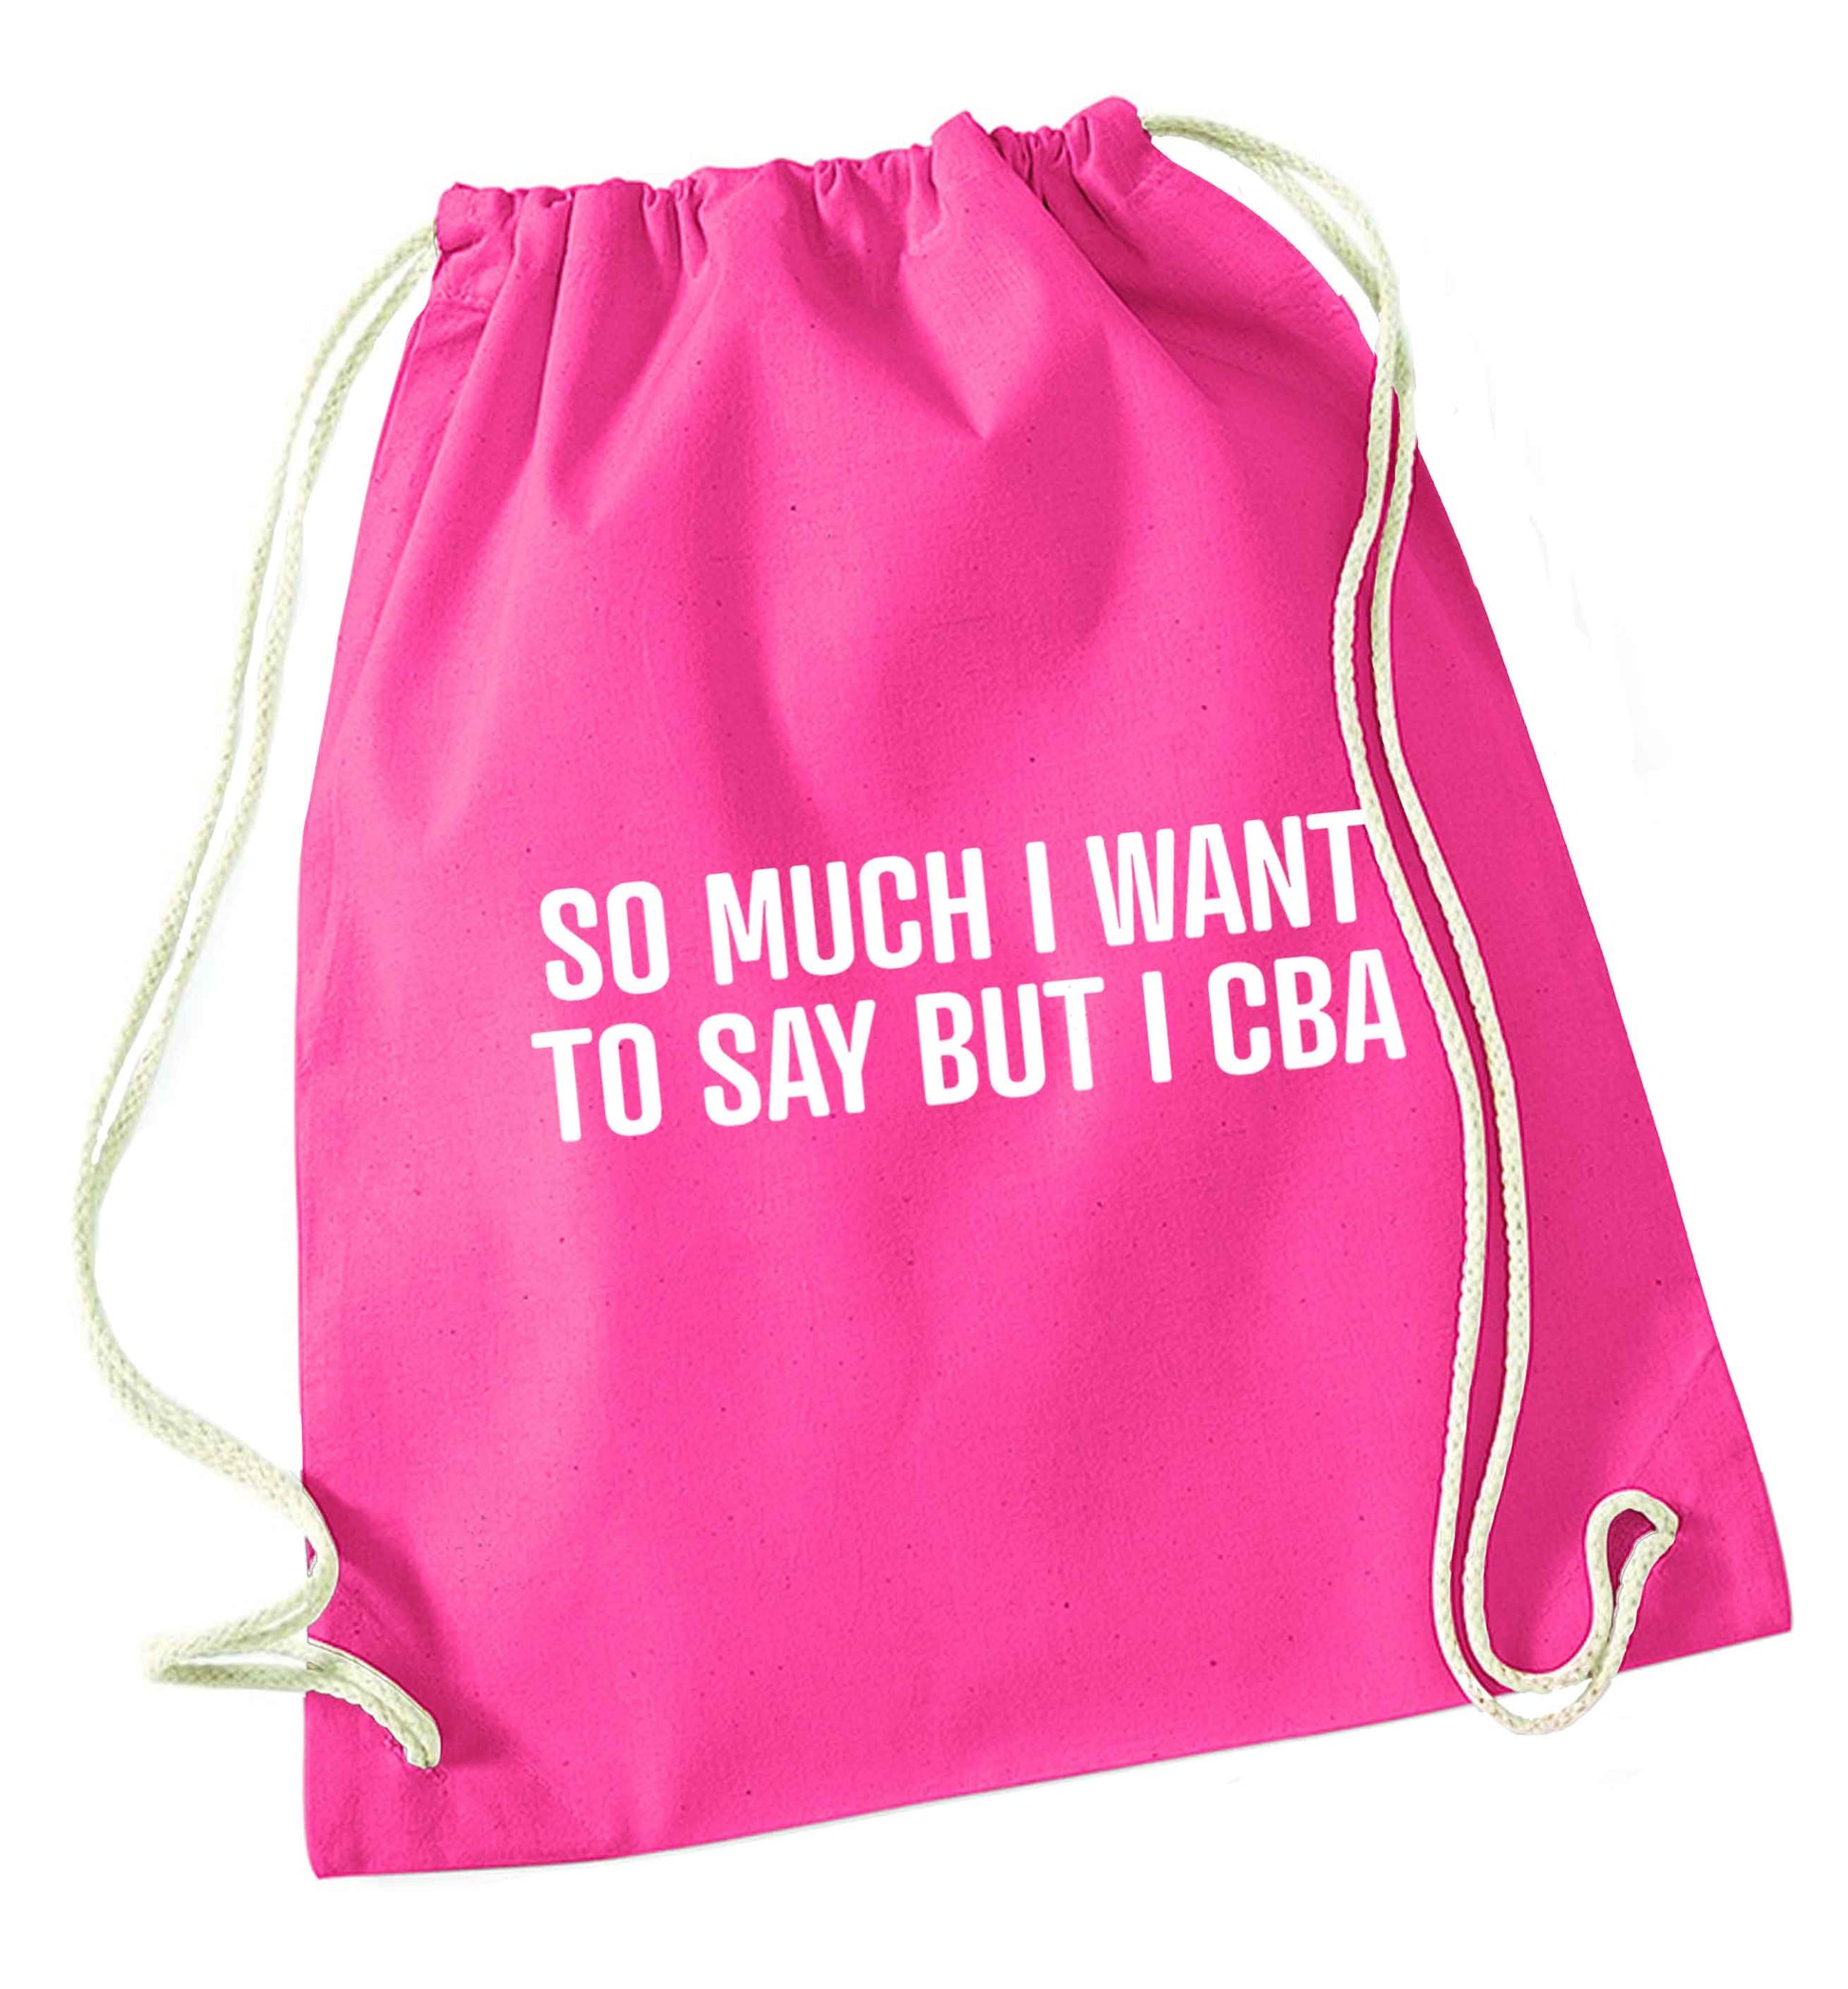 So much I want to say I cba  pink drawstring bag